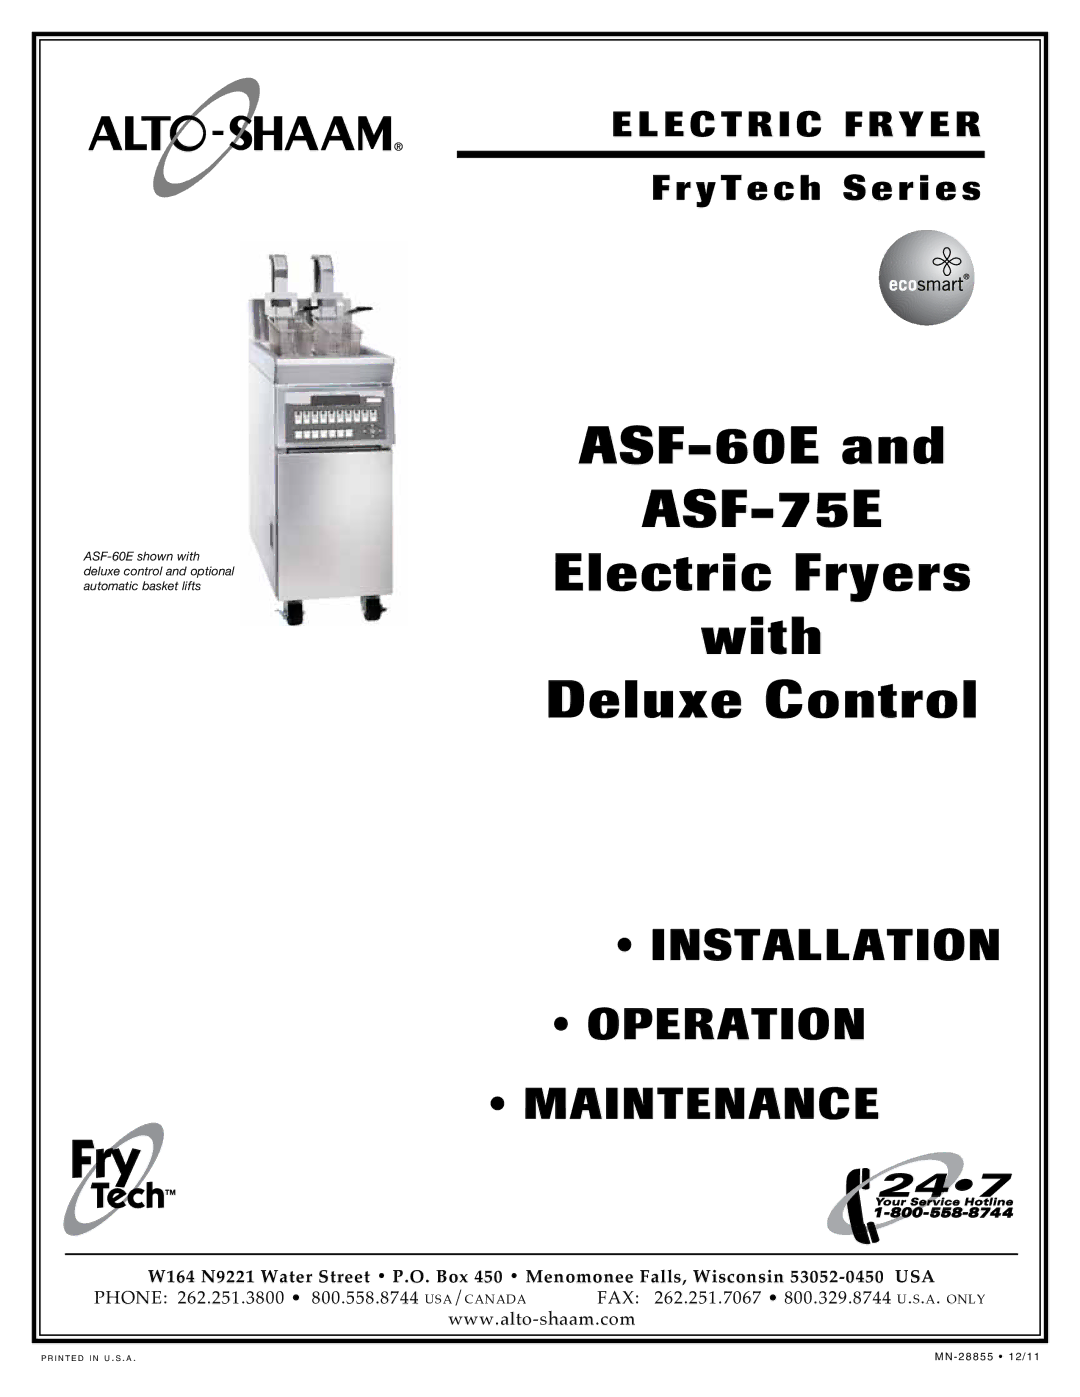 Alto-Shaam Electric Fryer manual Phone 262.251.3800 800.558.8744 USA/CANADA, 262.251.7067 800.329.8744 U.S.A. only 